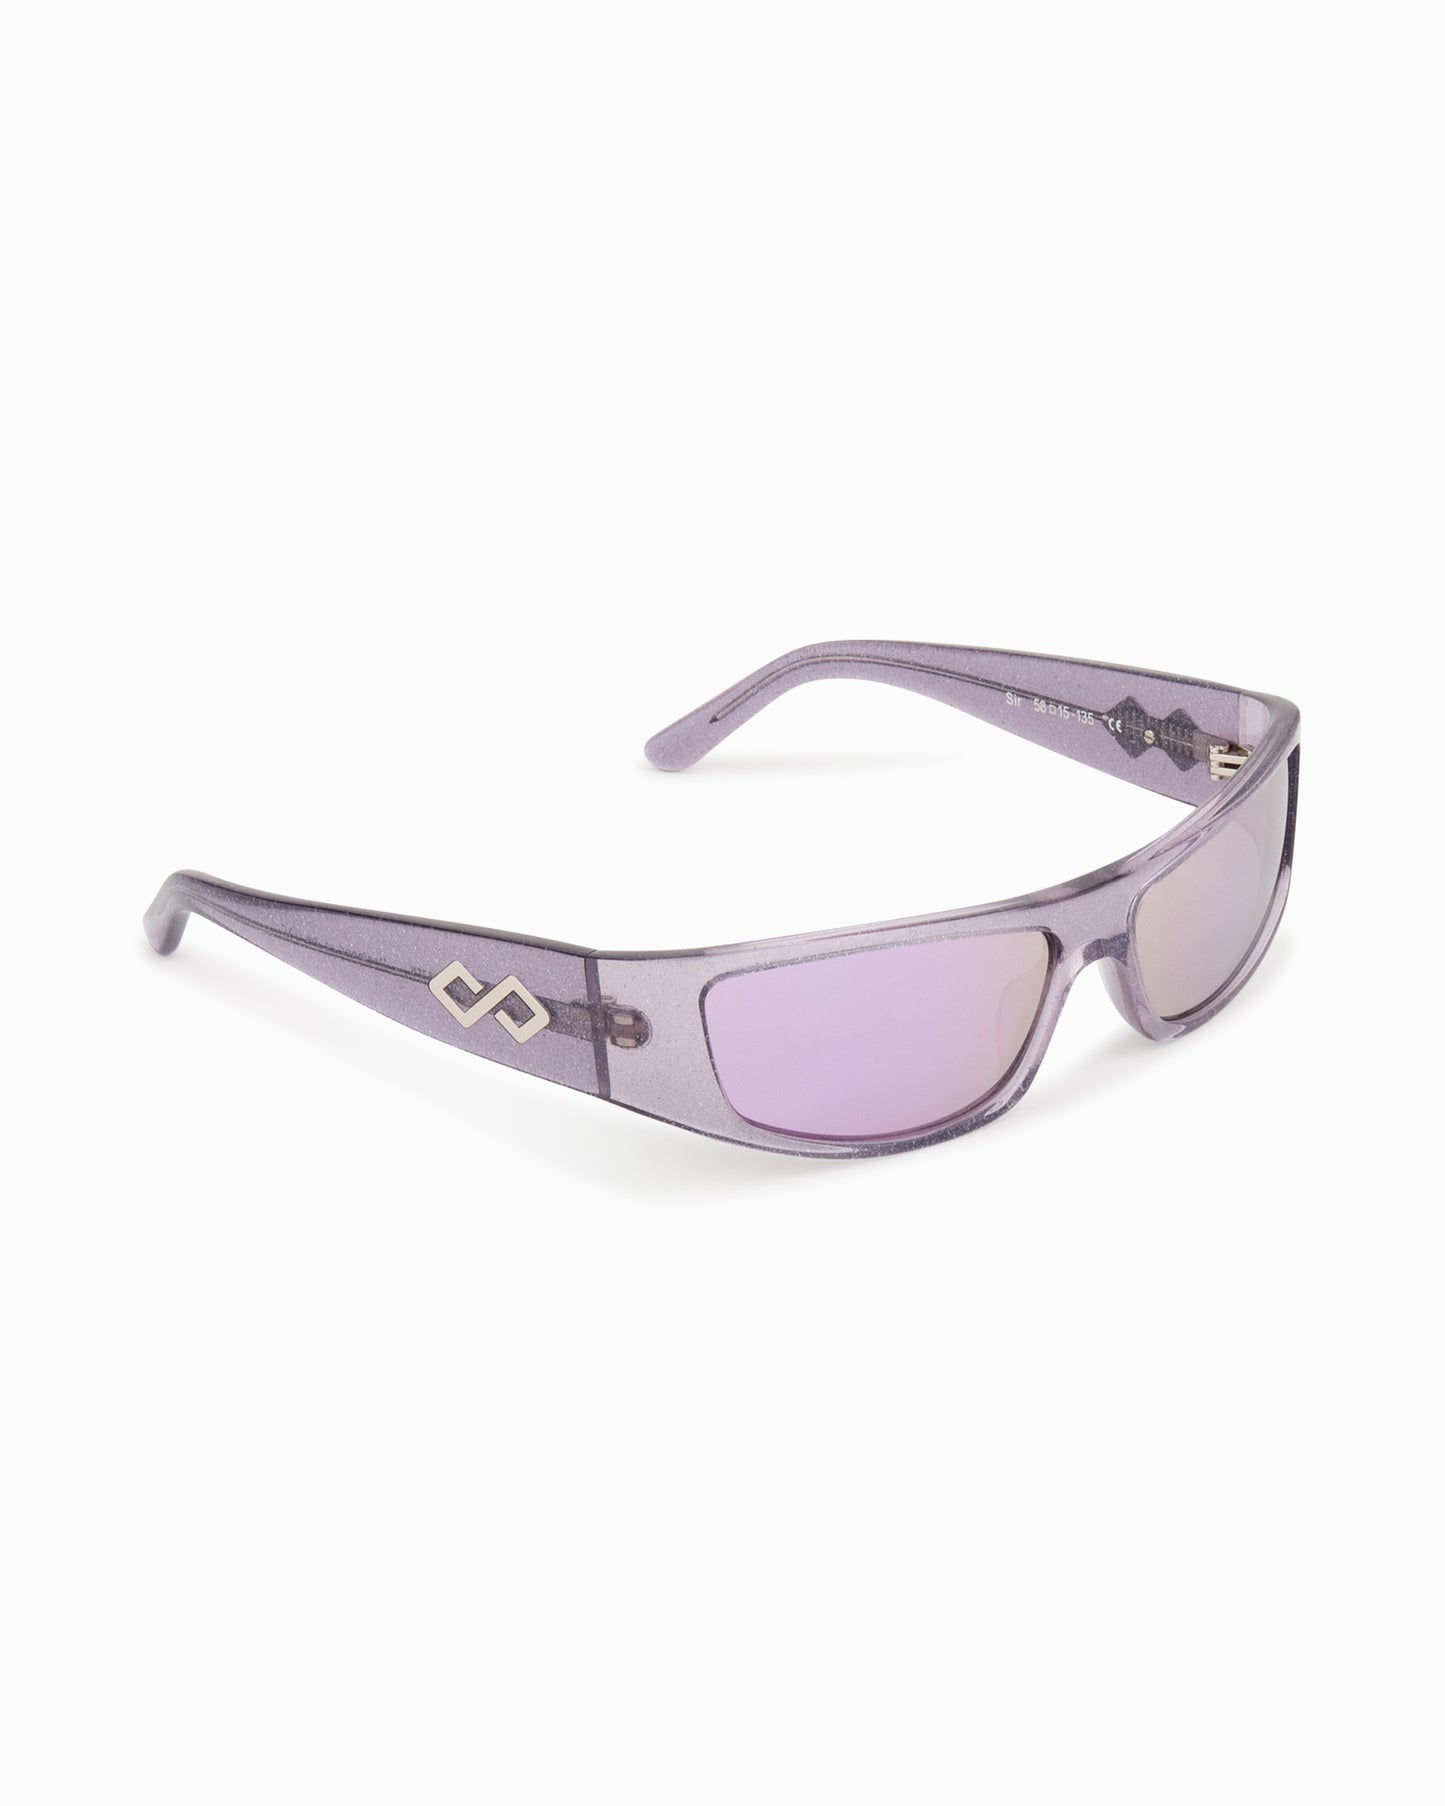 Side view | Rectangular sunglasses with Mirror purple lenses and purple frames | Acetate | Sir | Women's sunglasses | Karen Wazen Eyewear